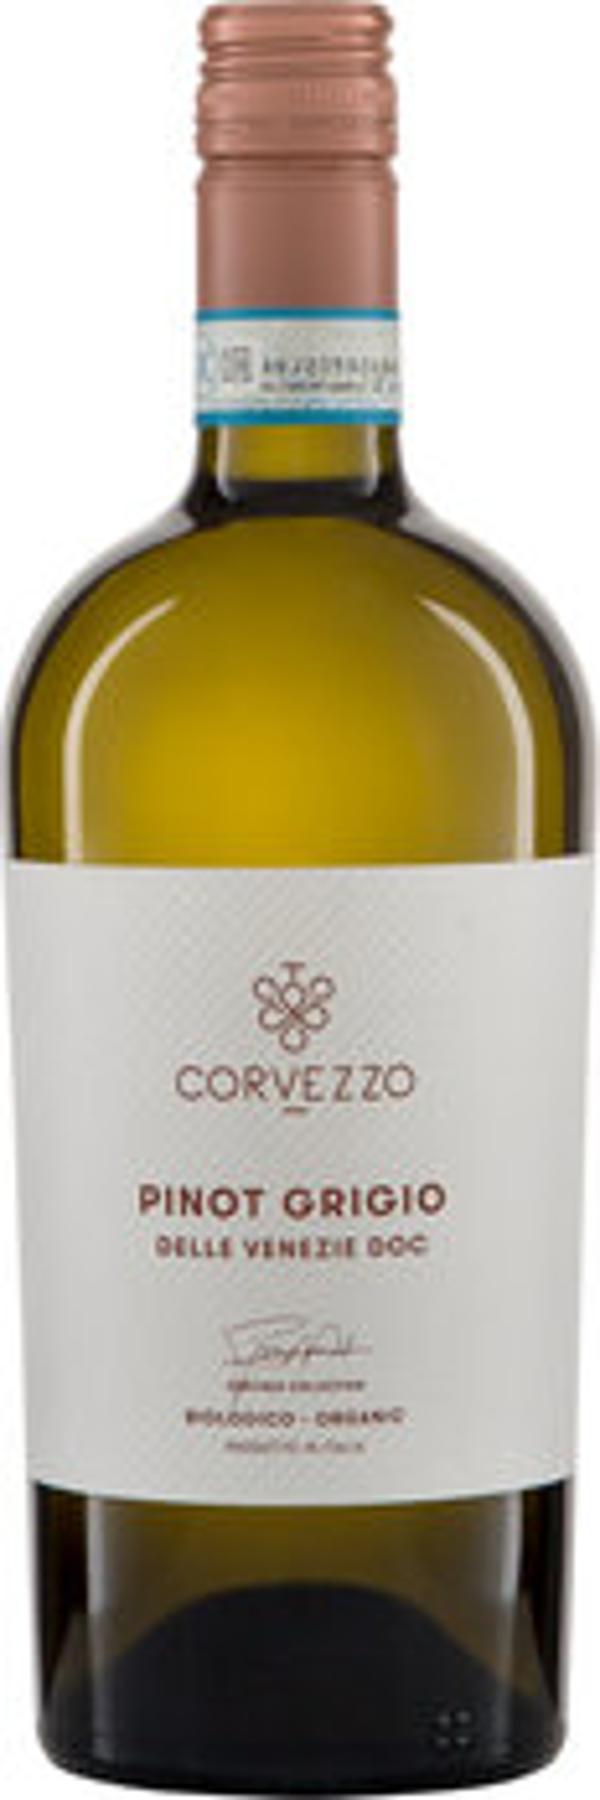 Produktfoto zu Pinot Grigio delle Venezie DOC